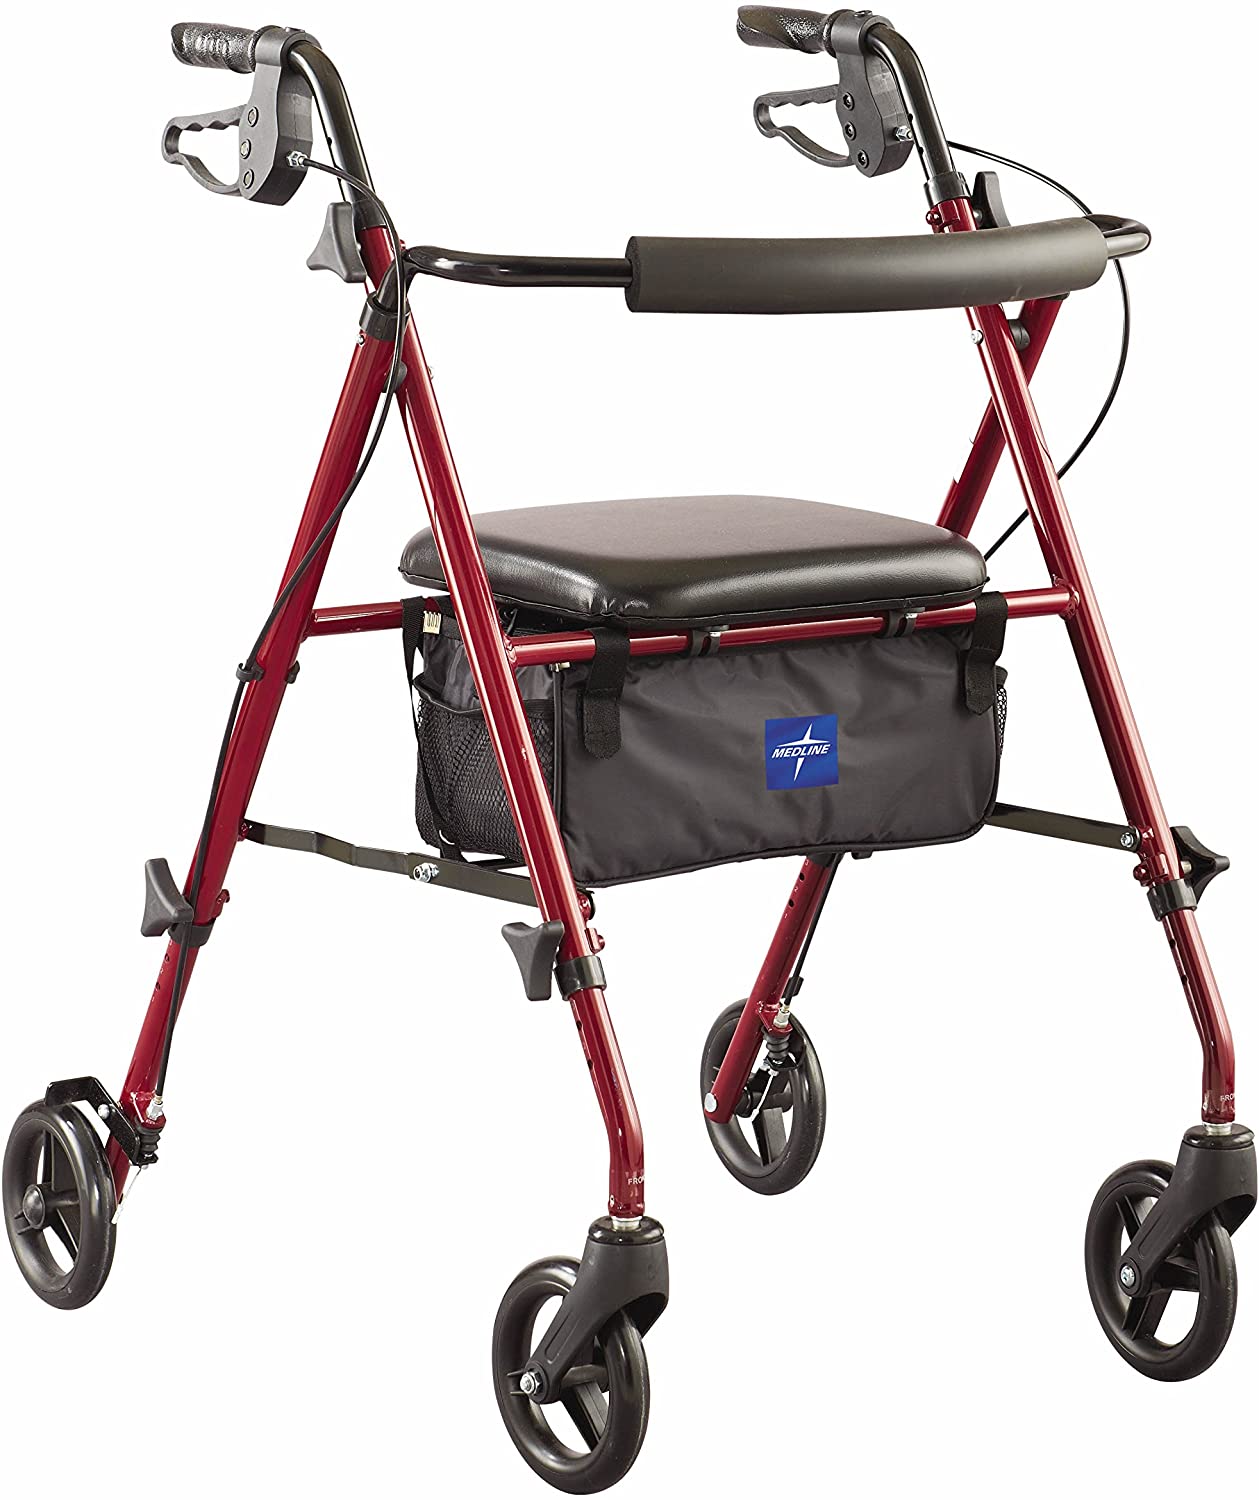 3. Medline Freedom Mobility Lightweight Rollator Walker